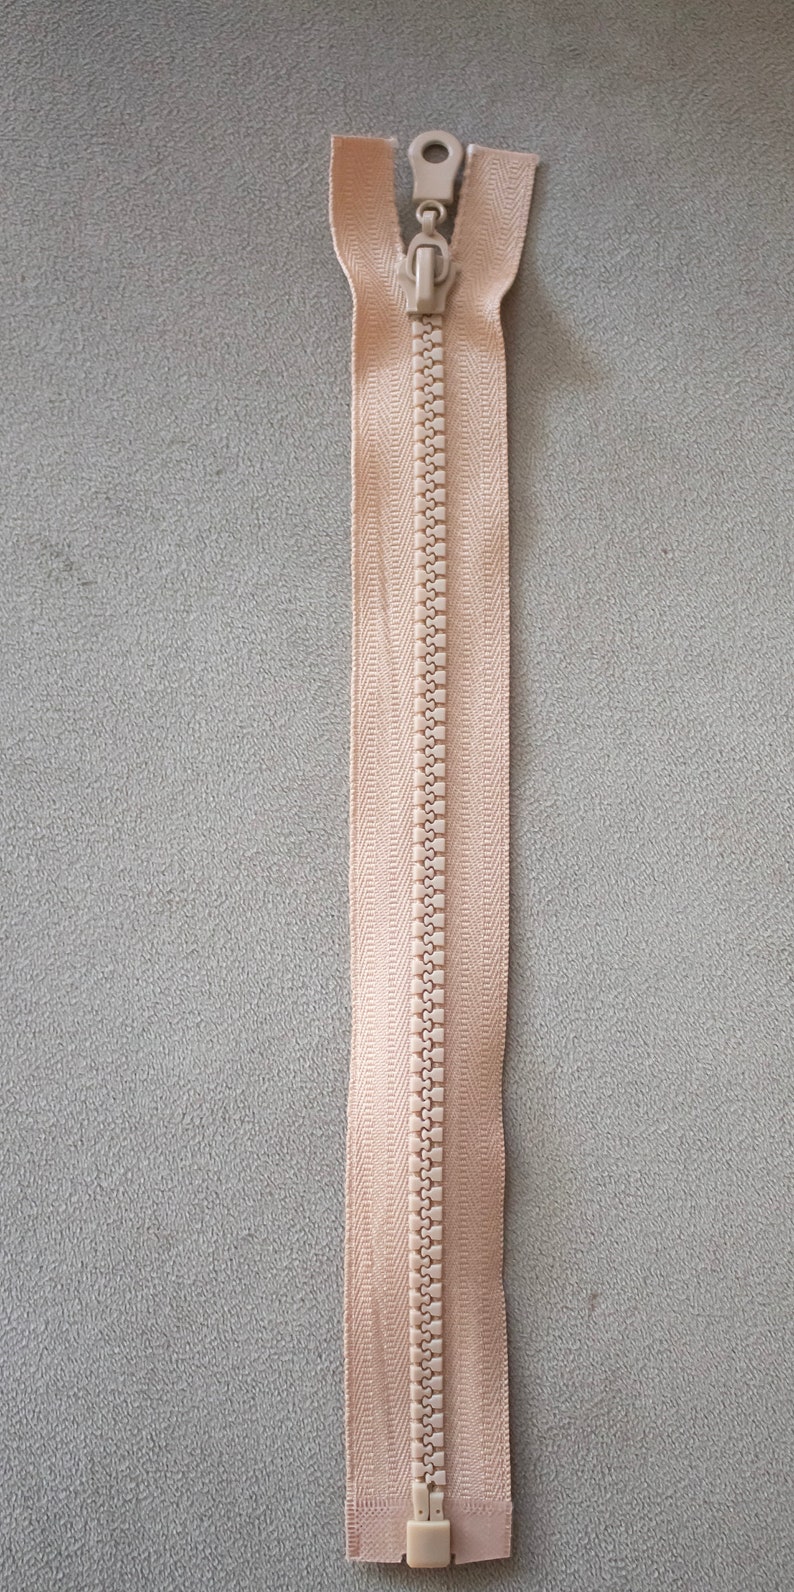 24 inc 1-Way , T6 Bone, Separating Hook, Pear Grip, Metal Zippers, Light Brown Color Zipper SKU/ES06 image 1